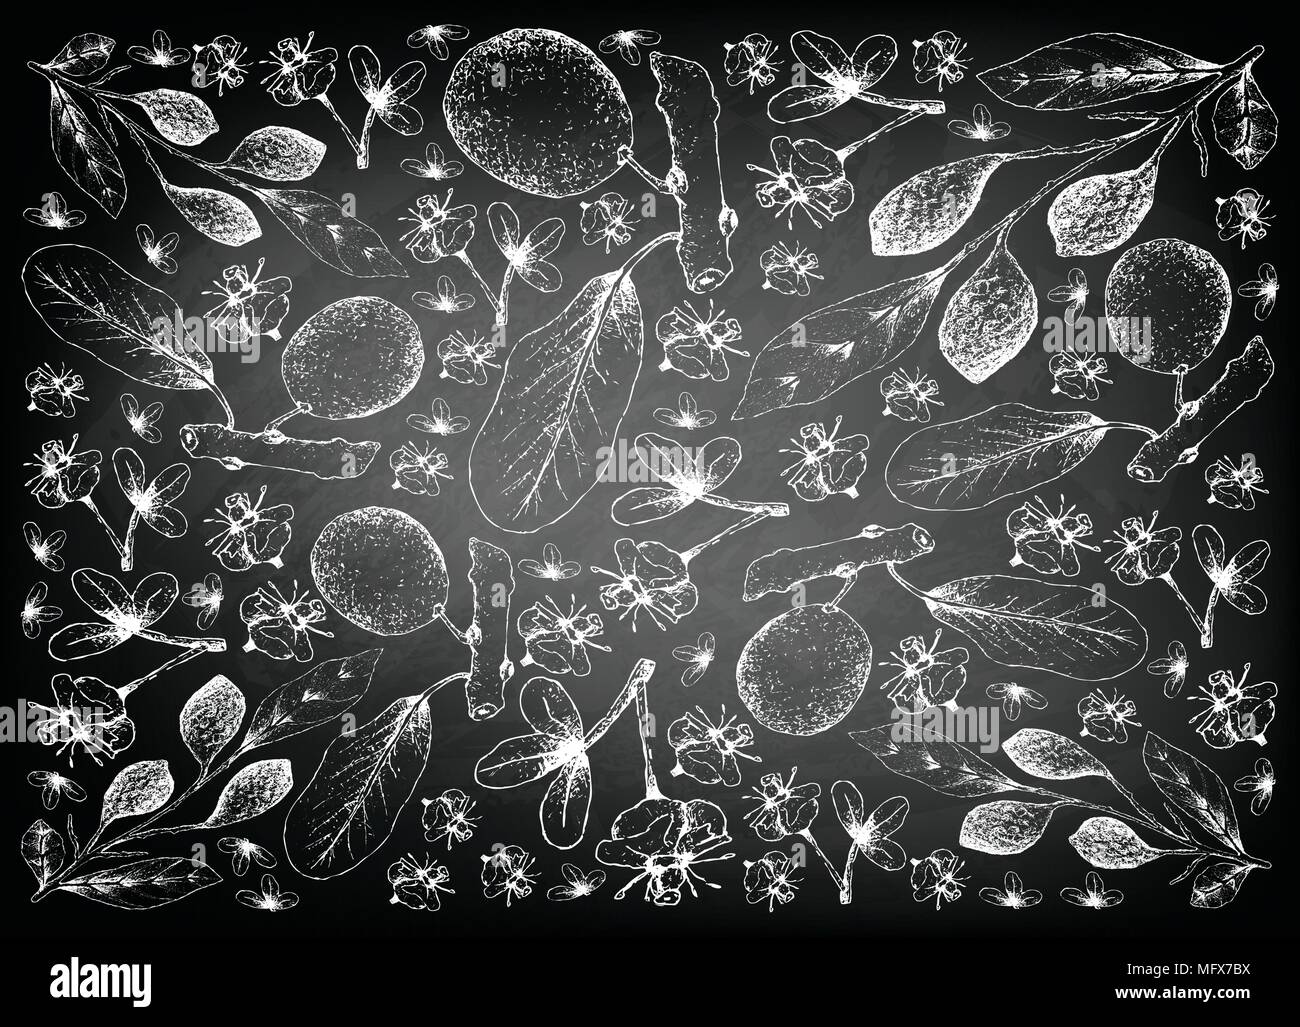 Tropical Fruits, Illustration Wallpaper Background of Hand Drawn Sketch Ripe Chebulic Myrobalan or Terminalia Cebula and Blushwood Berries or Hylandia Stock Vector